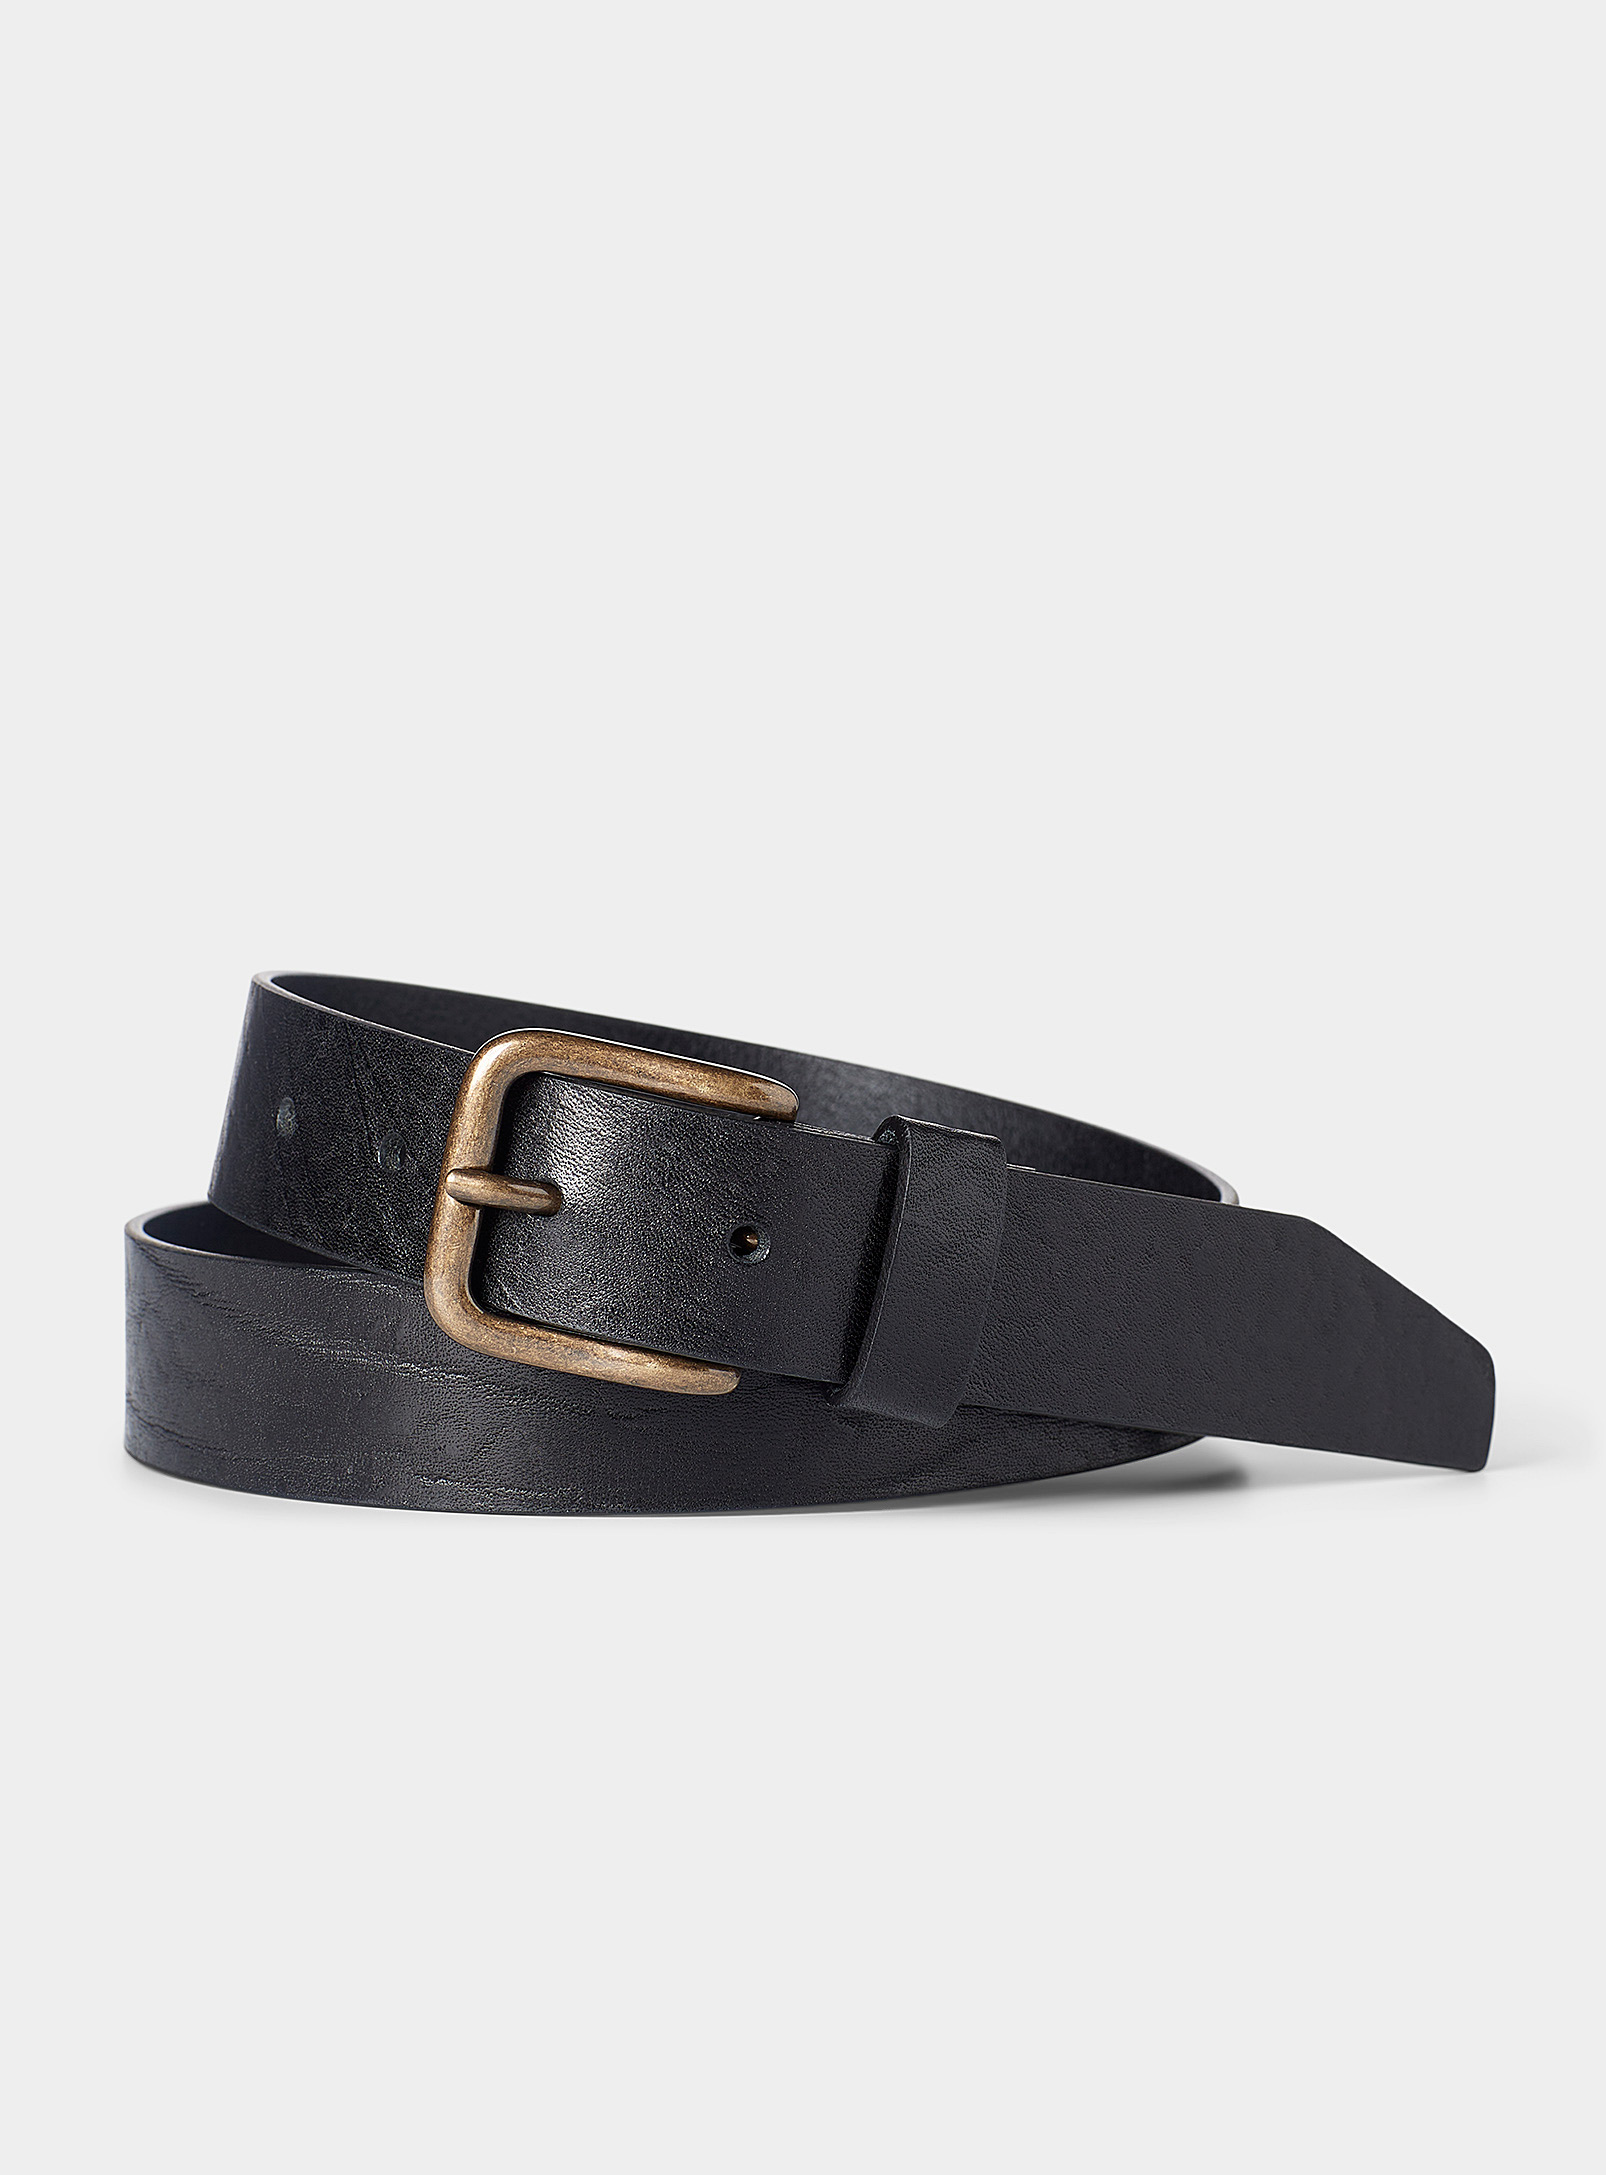 Jack & Jones Vintage-like Buckle Genuine Leather Belt In Black